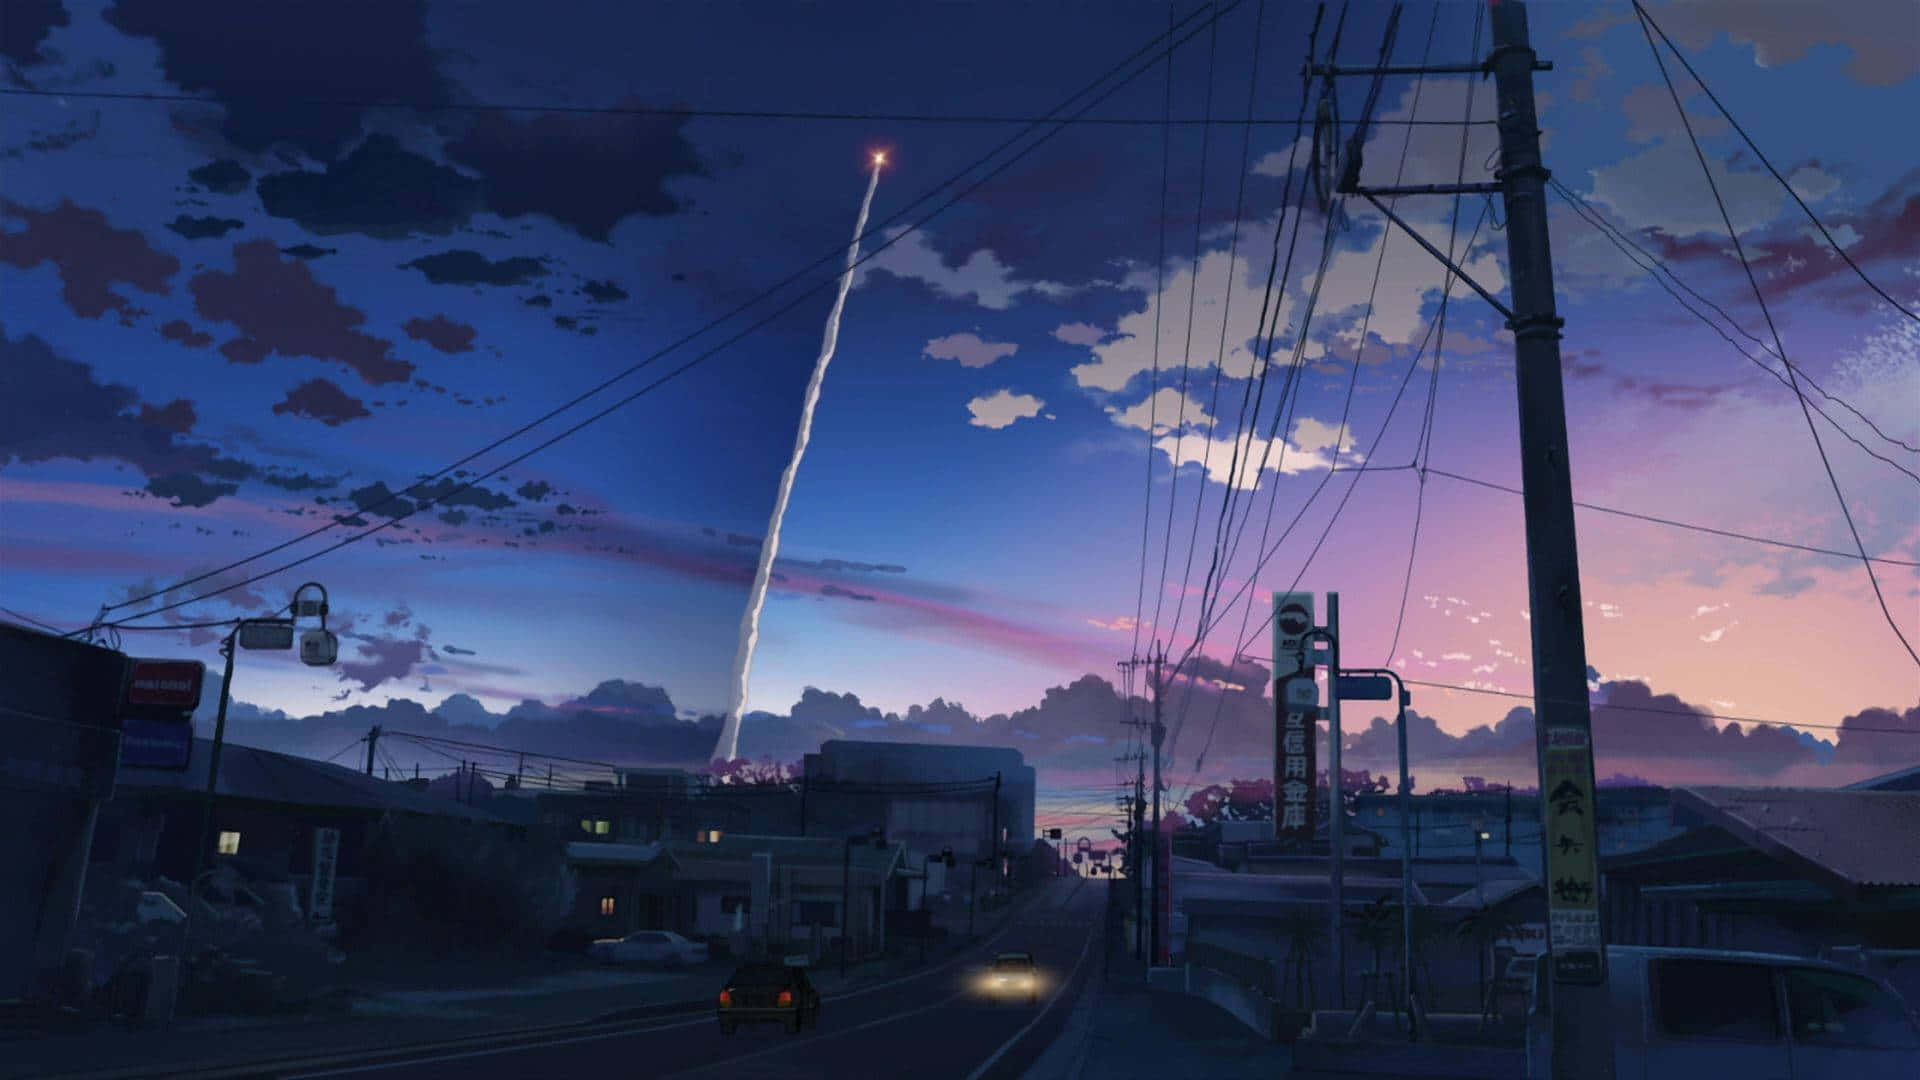 100+) Tumblr | Anime city, Dark city, City